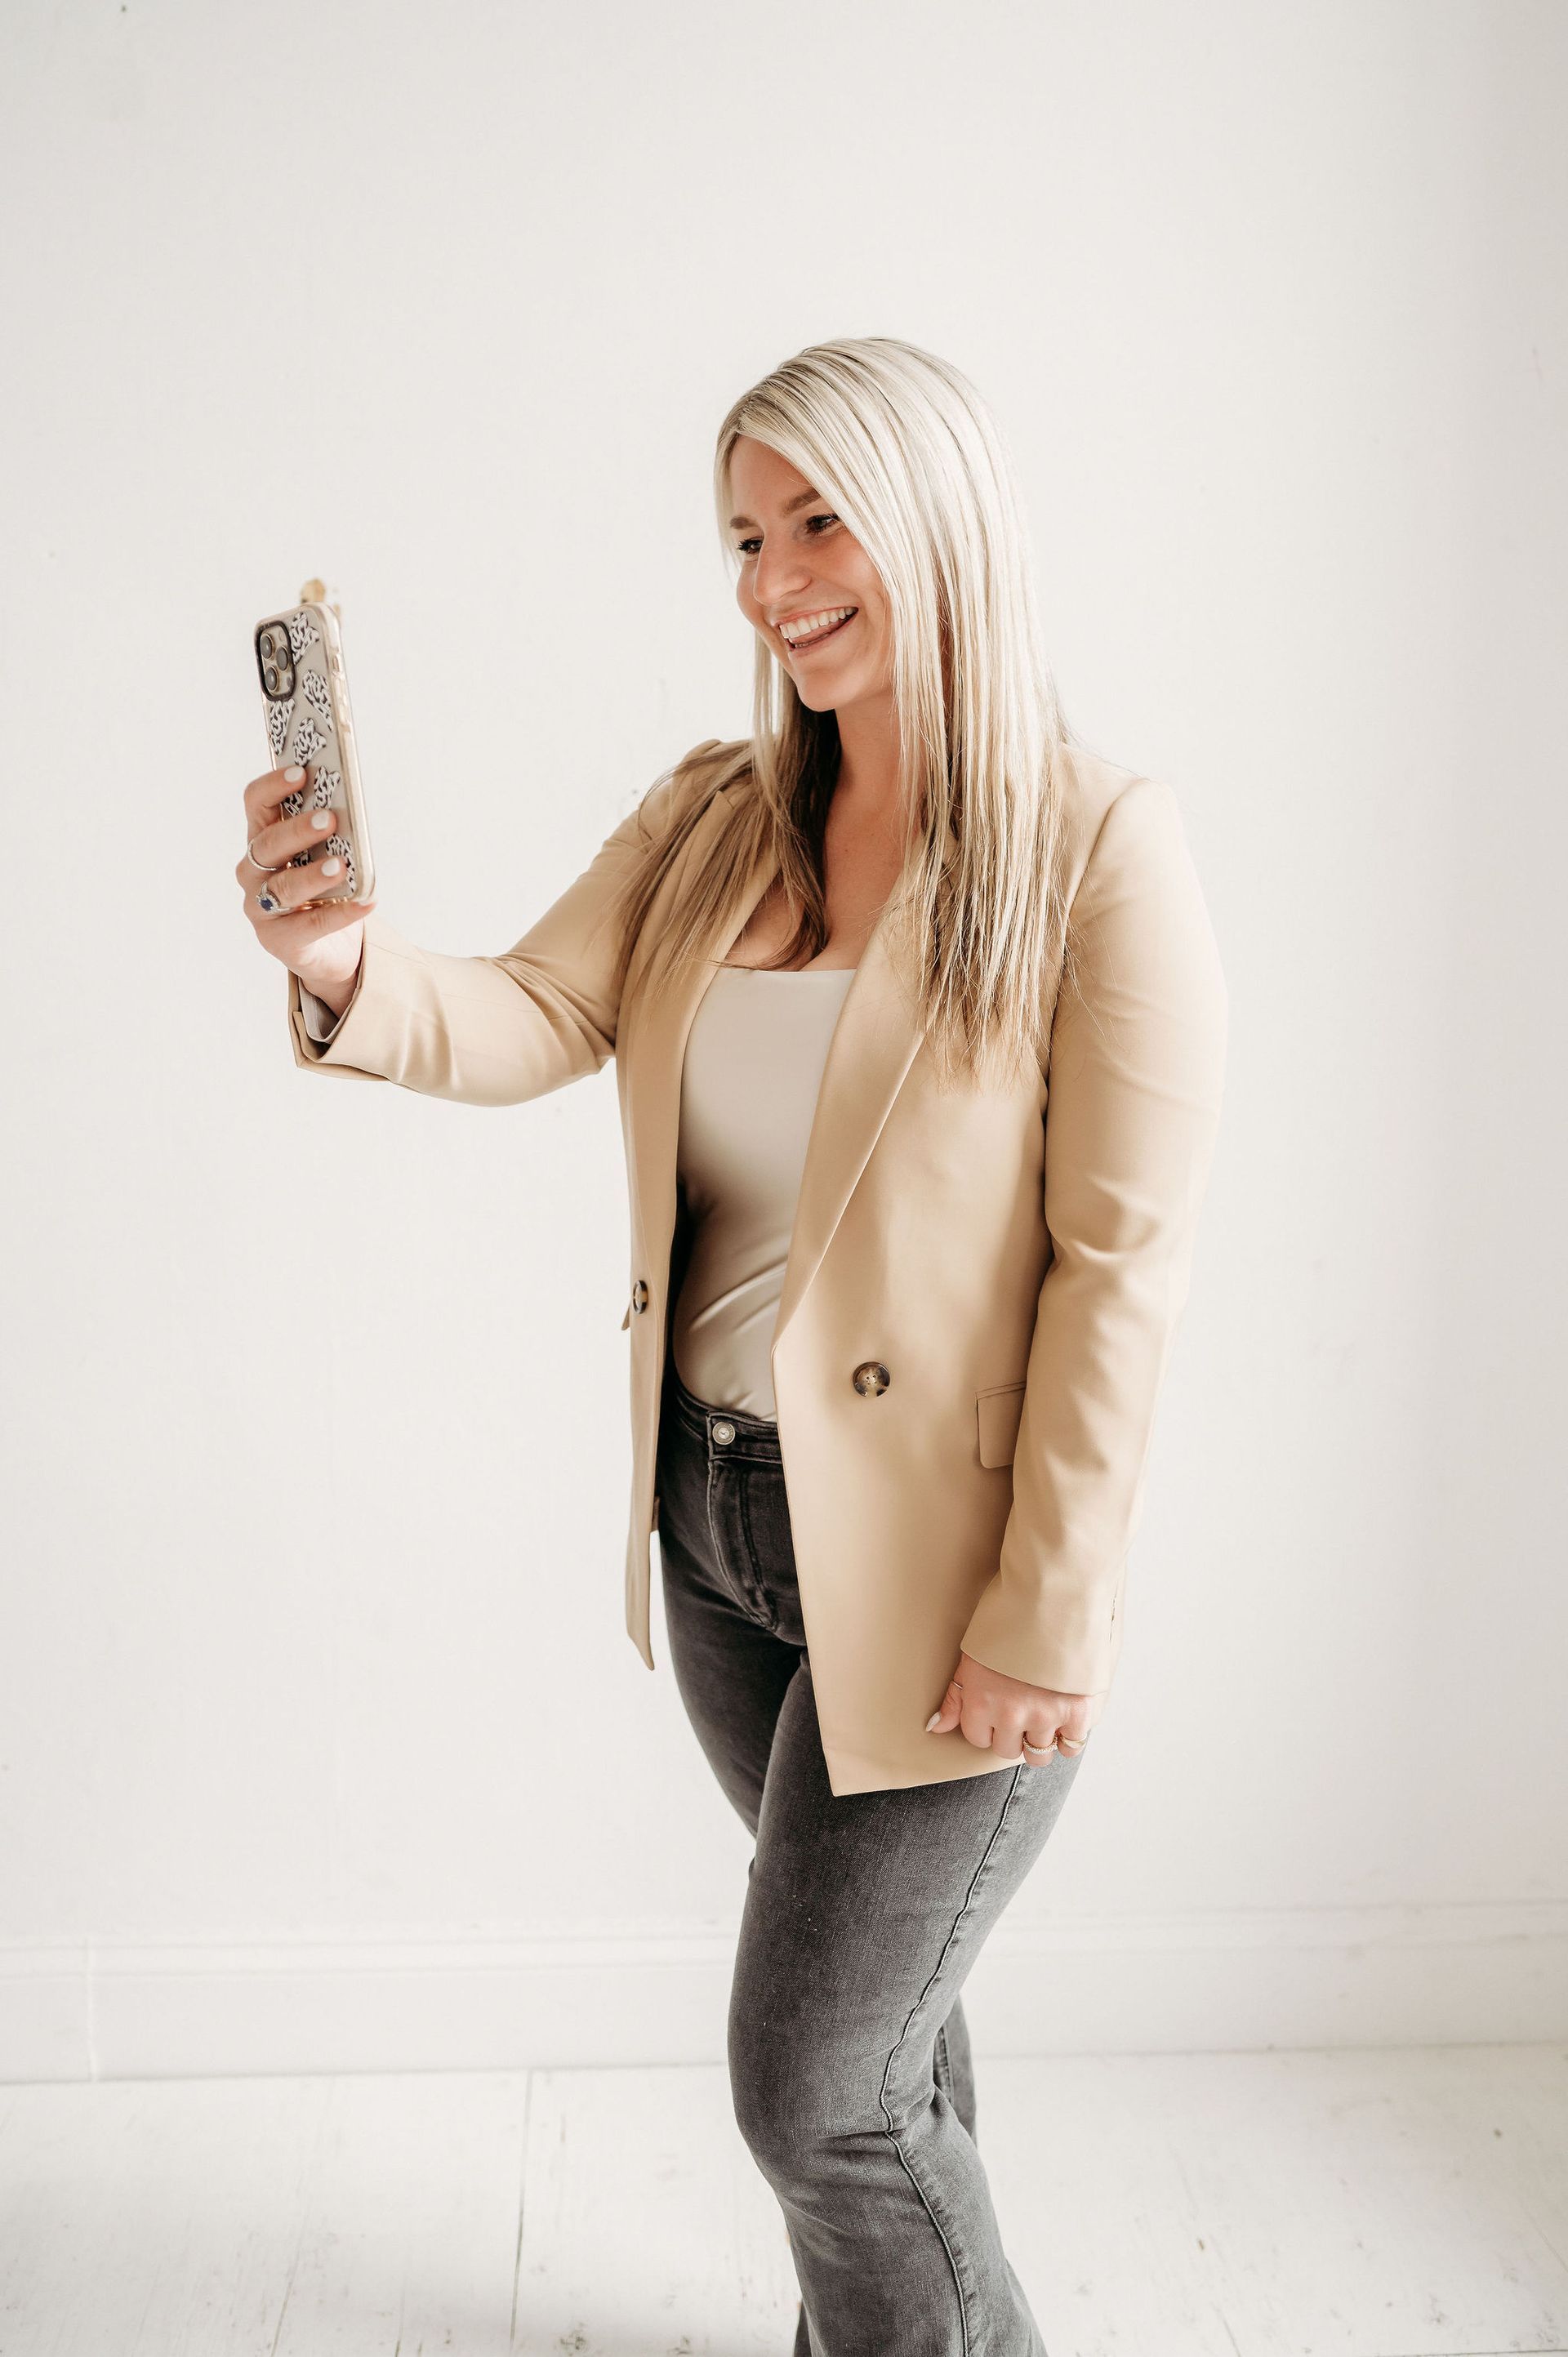 social media marketing specialist taking a selfie